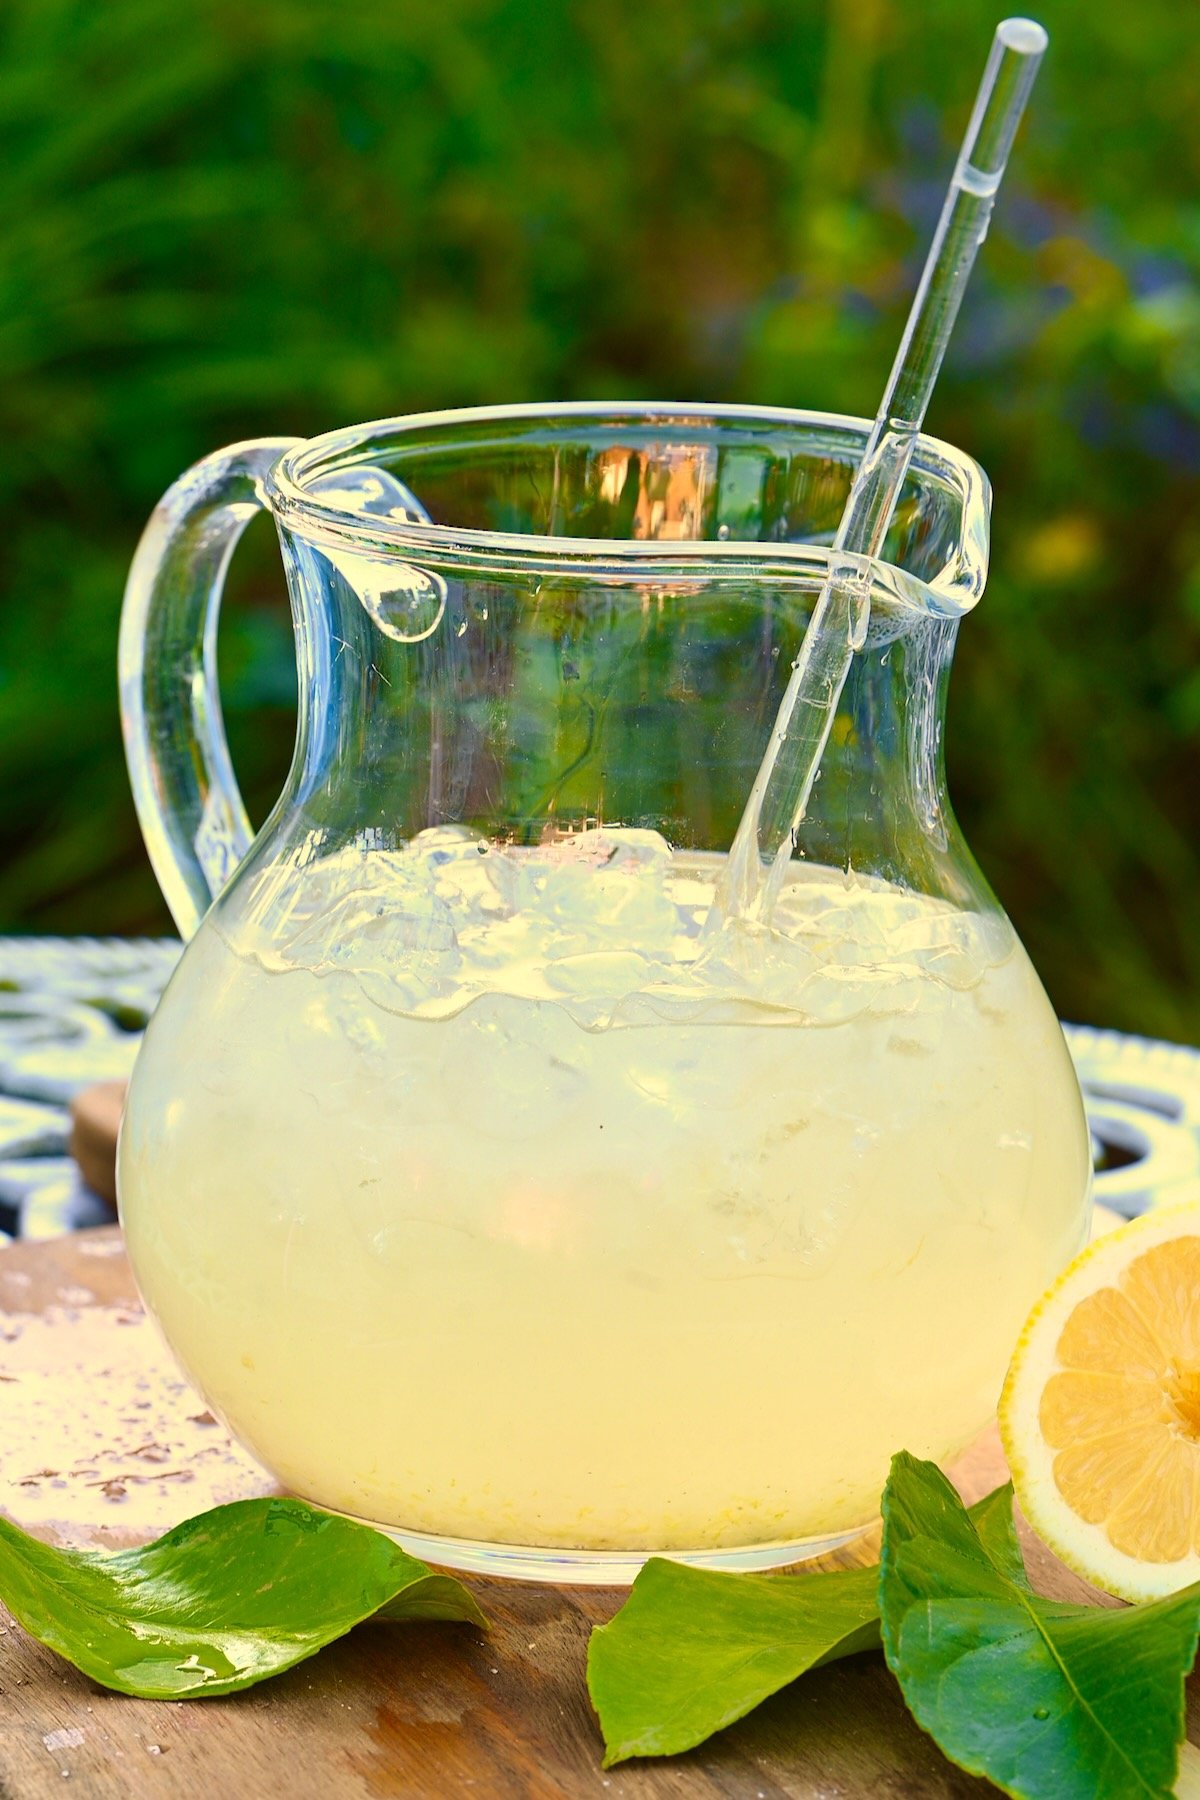 Homemade lemonade in a pitcher